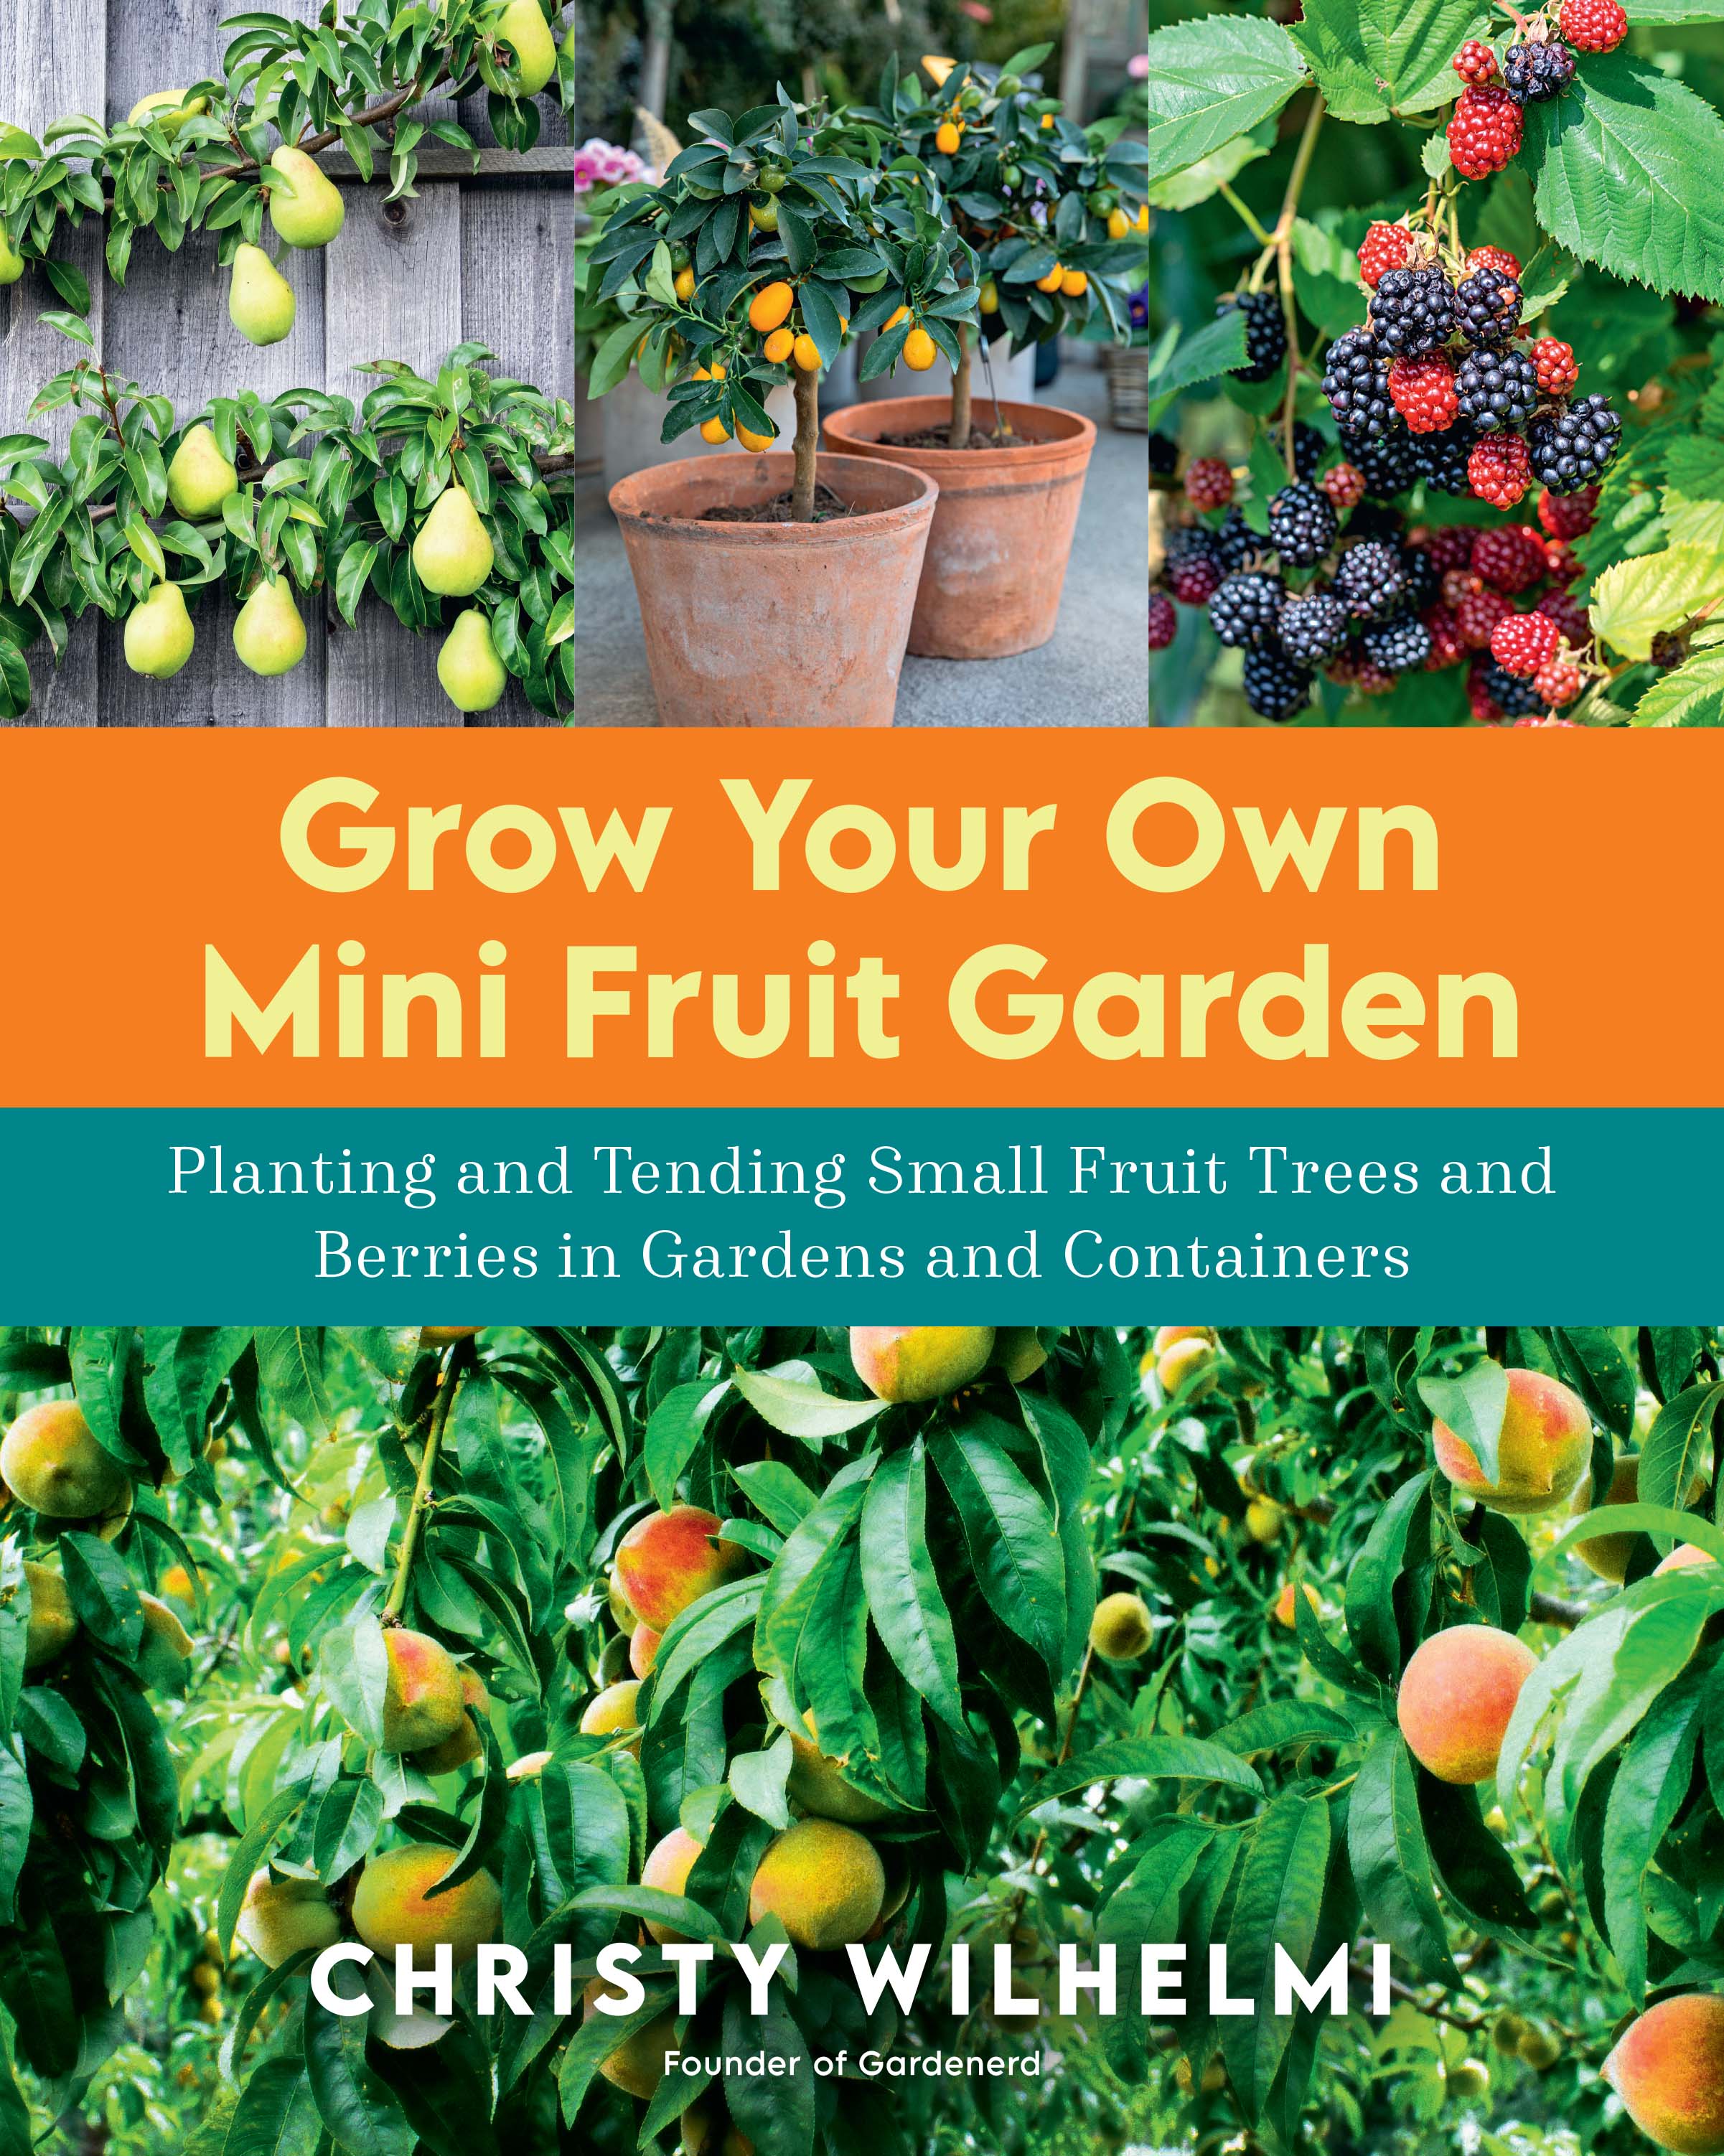 Miniature Gardens eBook by Katie Elzer-Peters - EPUB Book